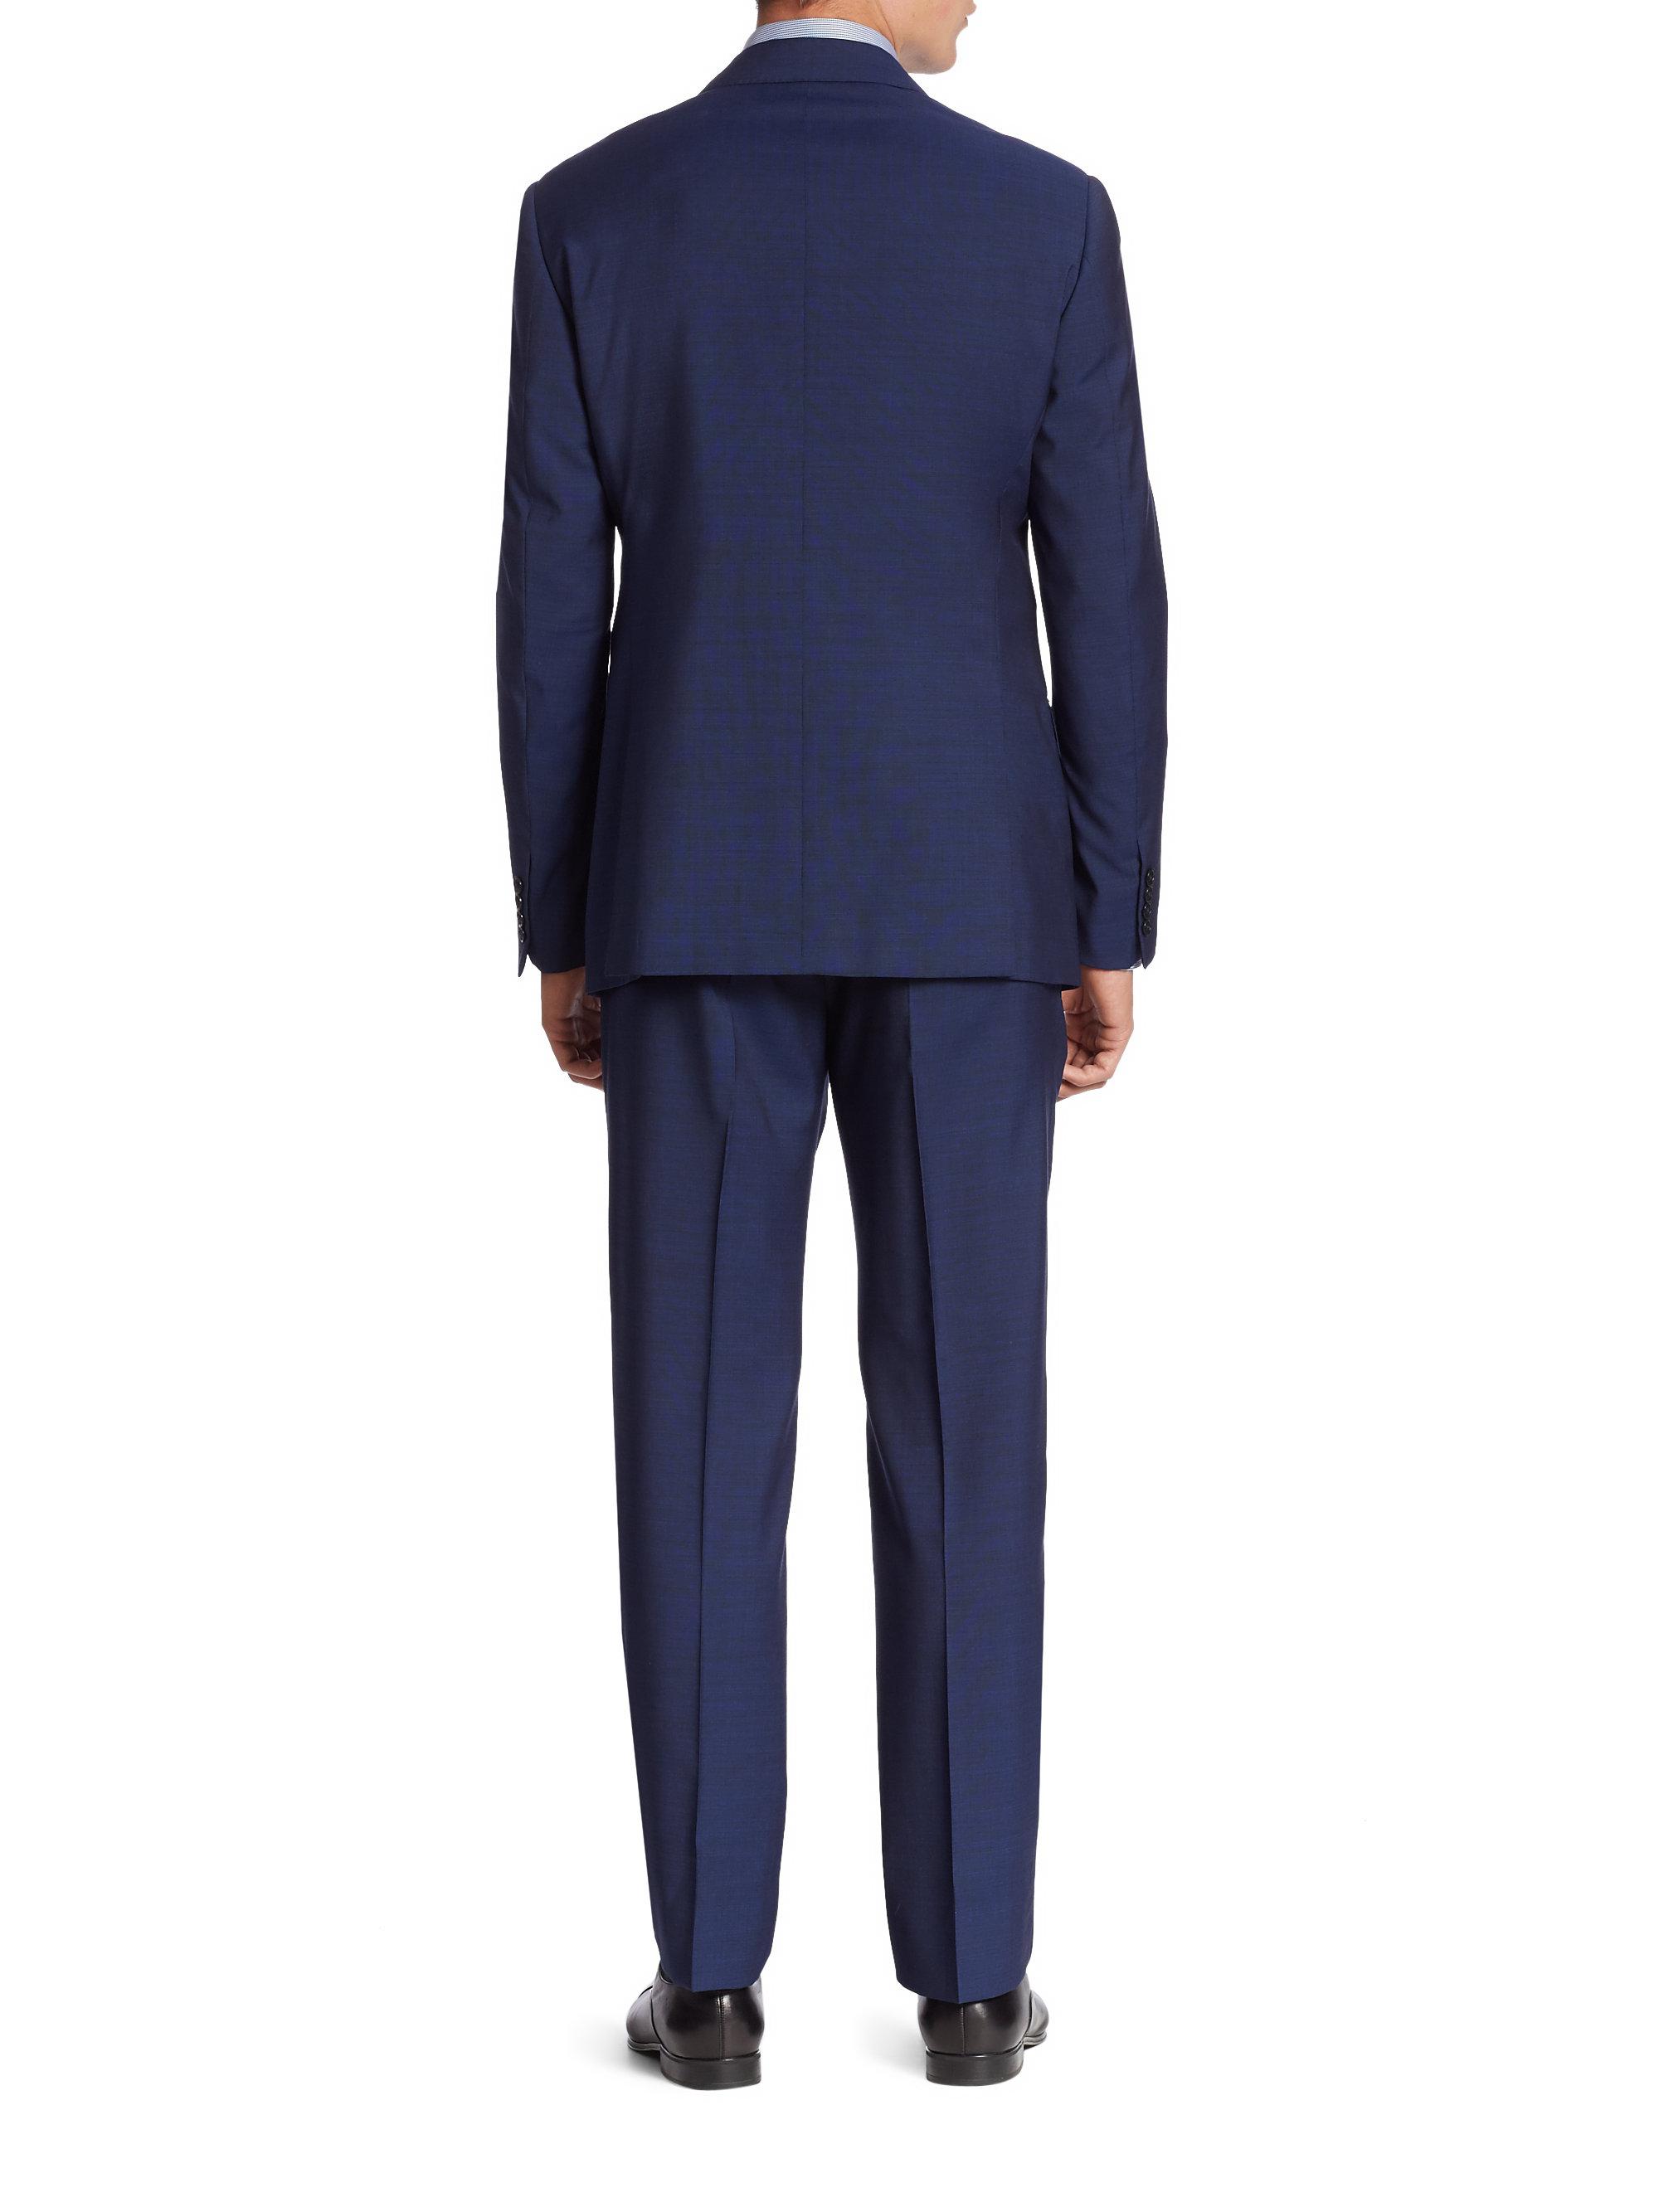 Lyst - Armani G-line Suit in Blue for Men